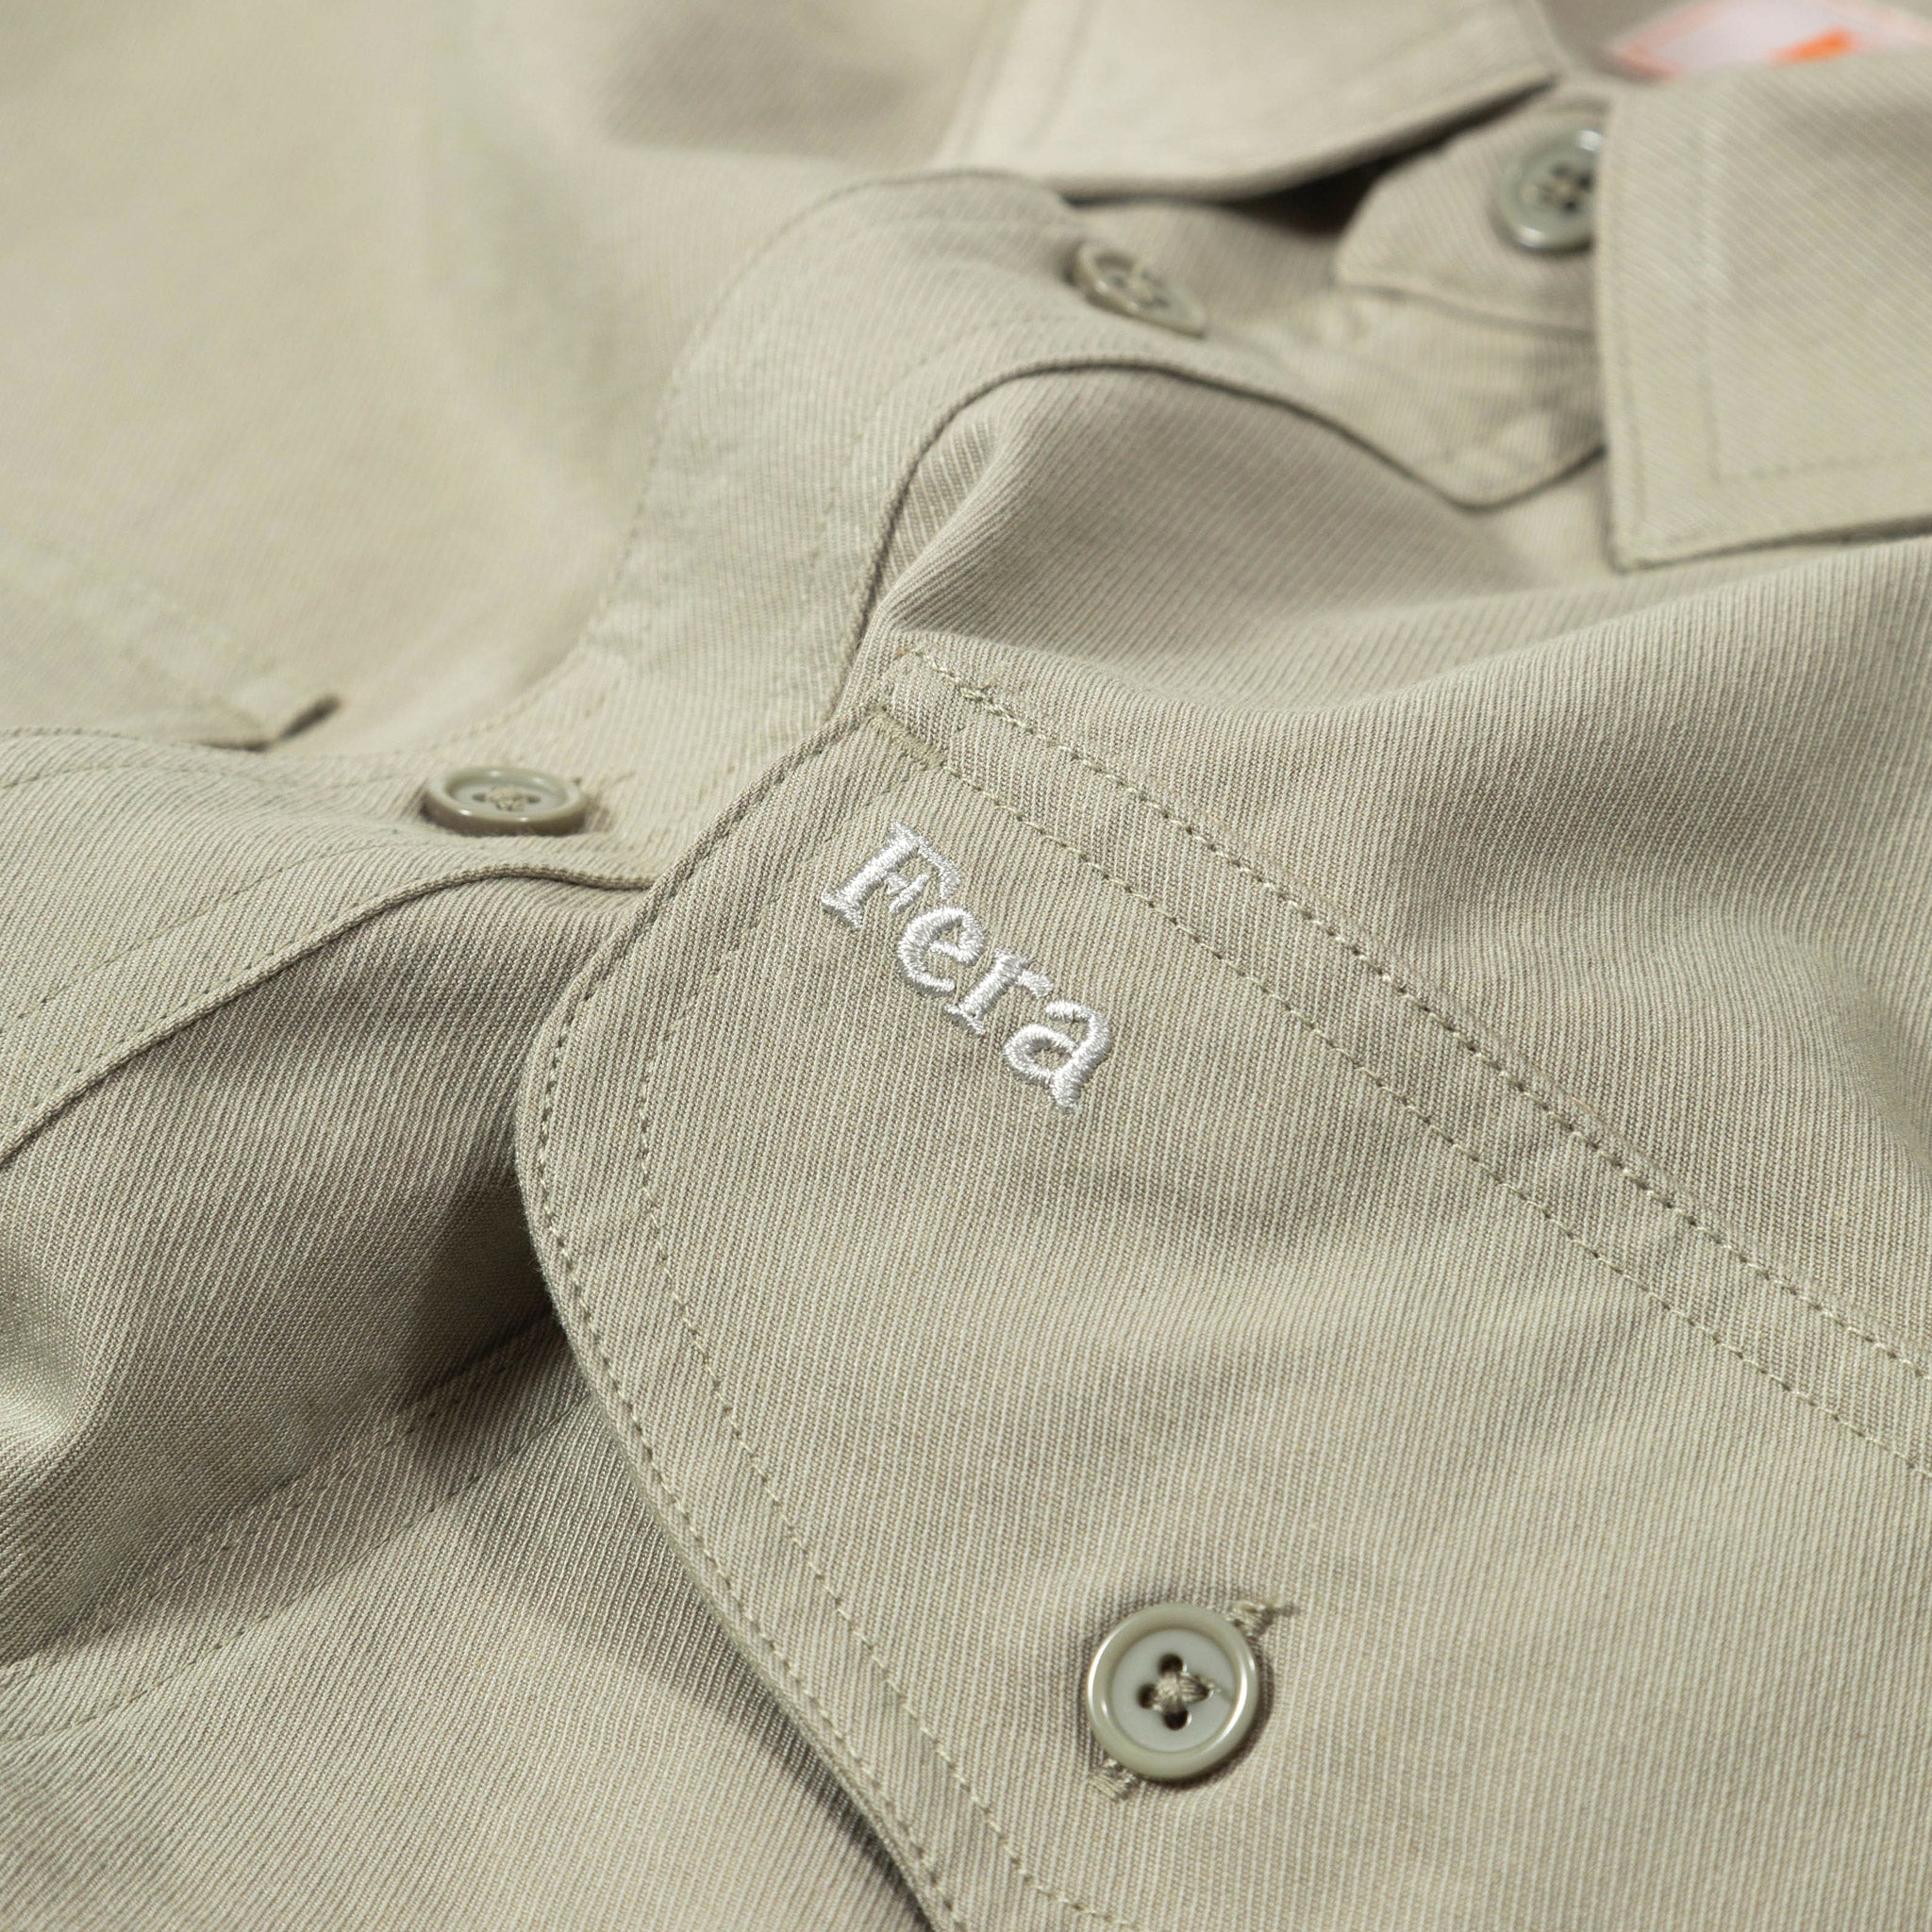 Fera Field Shirt - Lichen